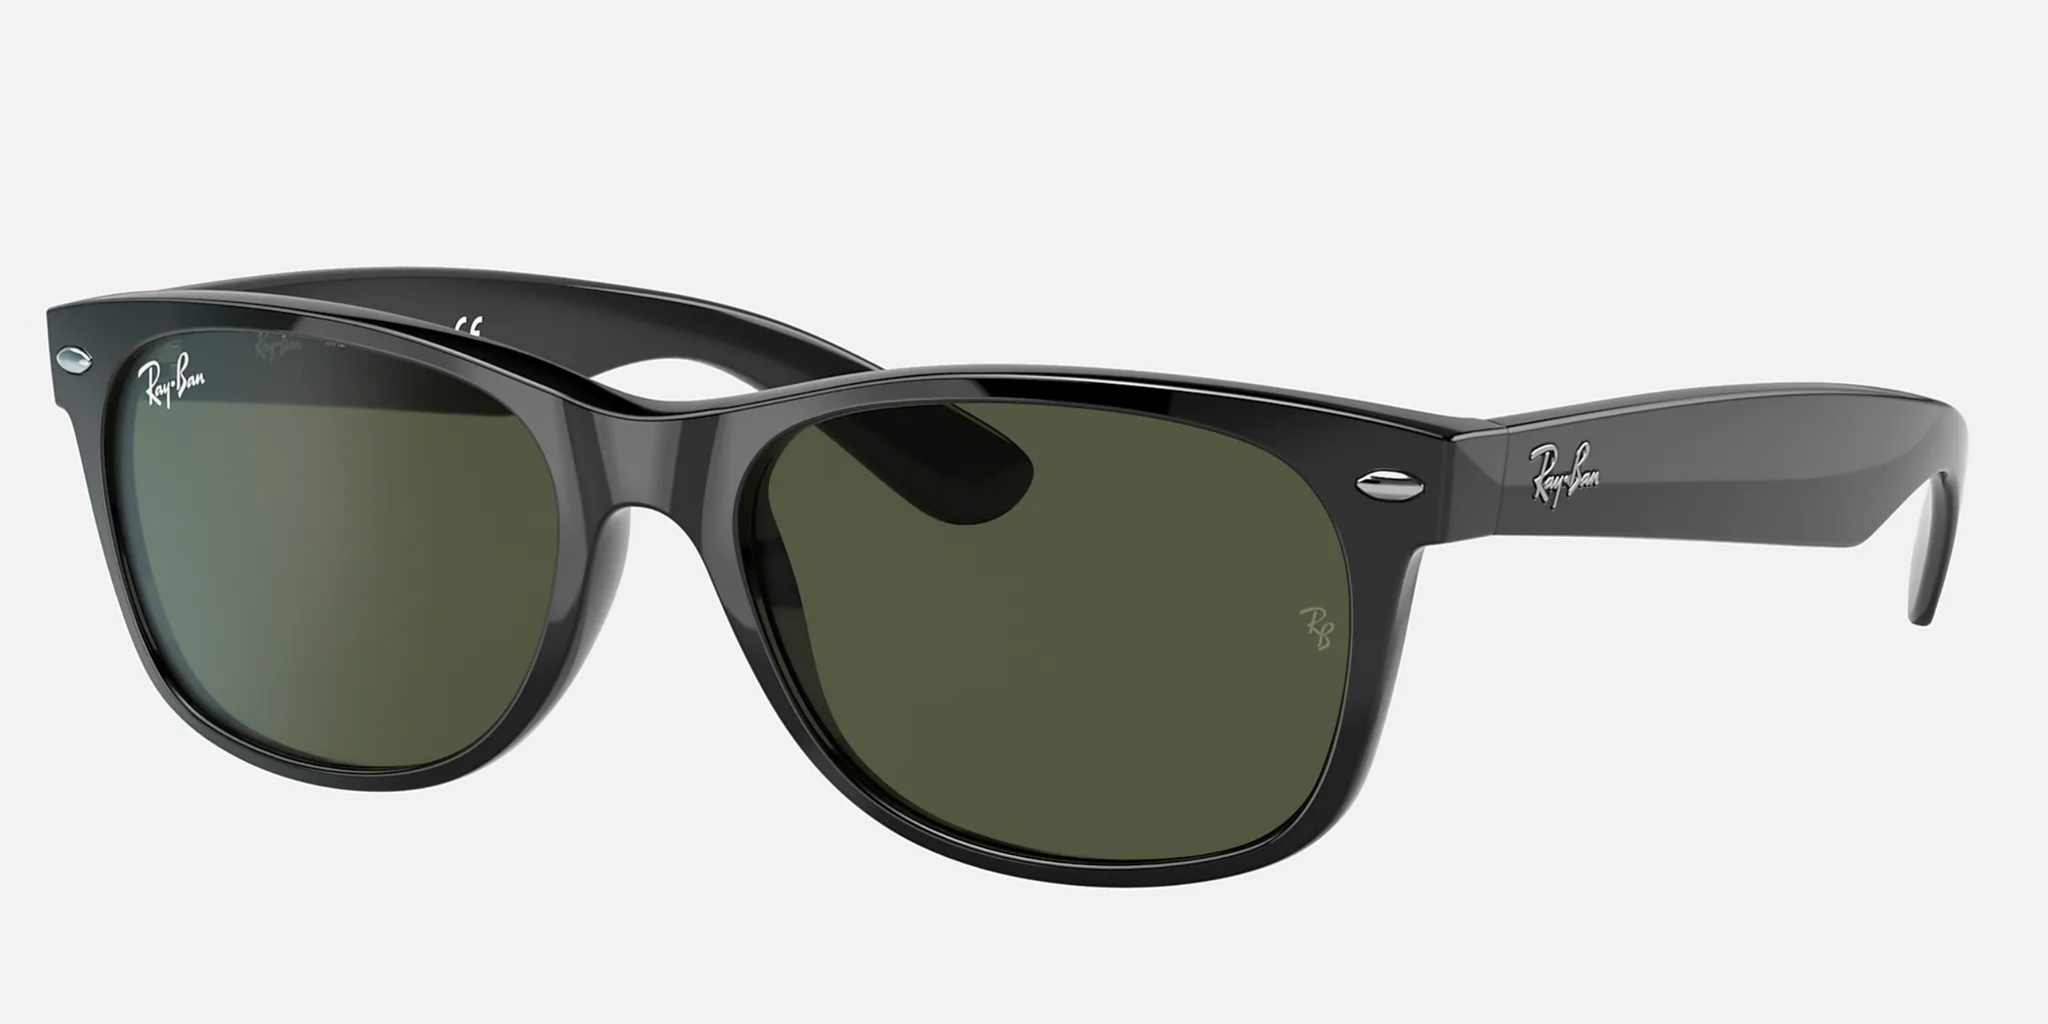 tyv bundt Samme Ray-Ban New Wayfarer Black Classic Sunglasses RB2132 - Flight Sunglasses